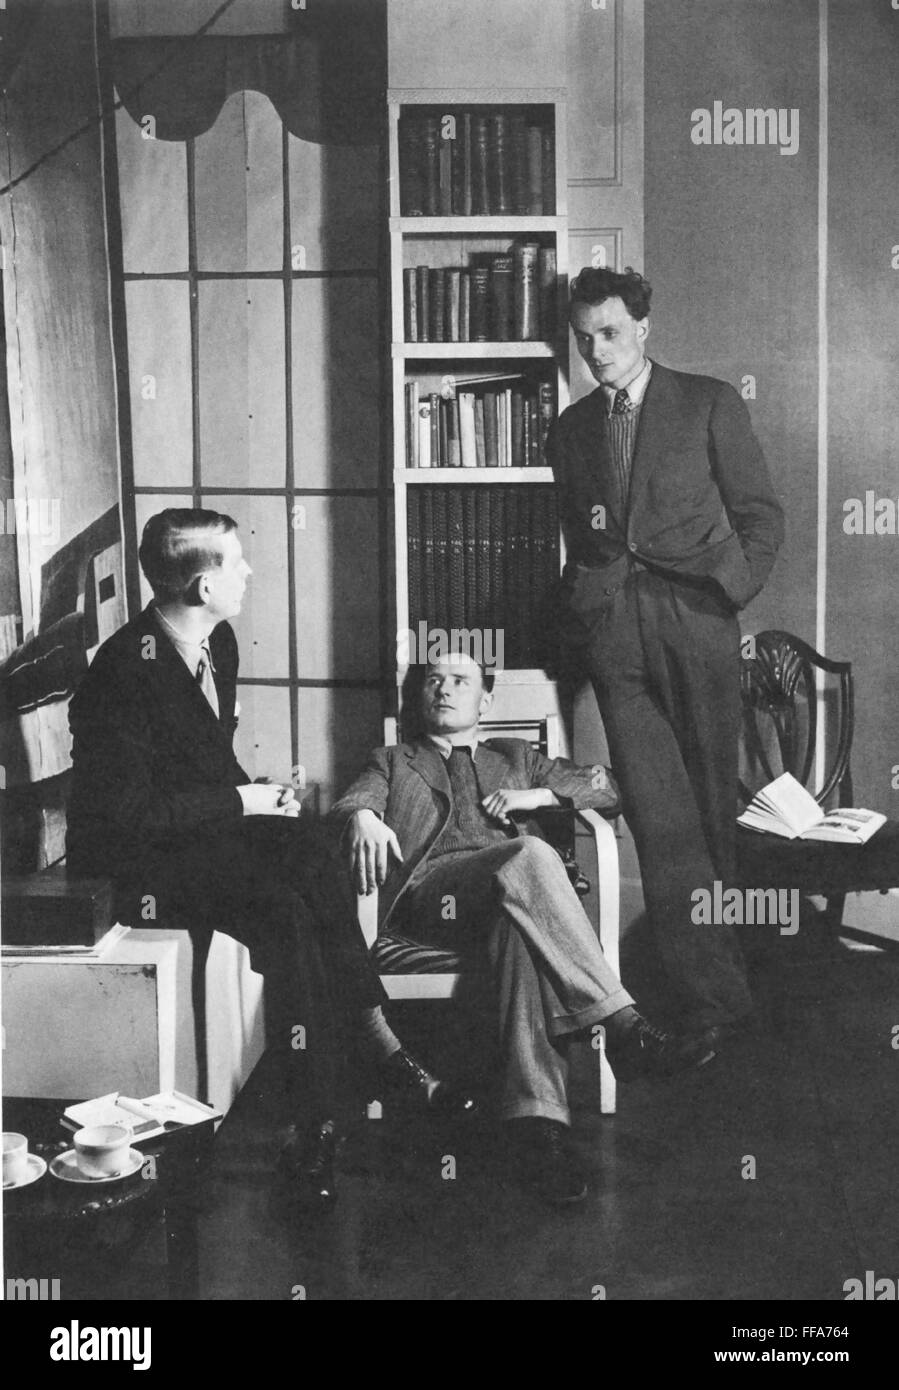 AUDEN, ISHERWOOD, SPENDER./nEnglish writers W.H. Auden, Christopher Isherwood, and Stephen Spender; photographed in 1938. Stock Photo